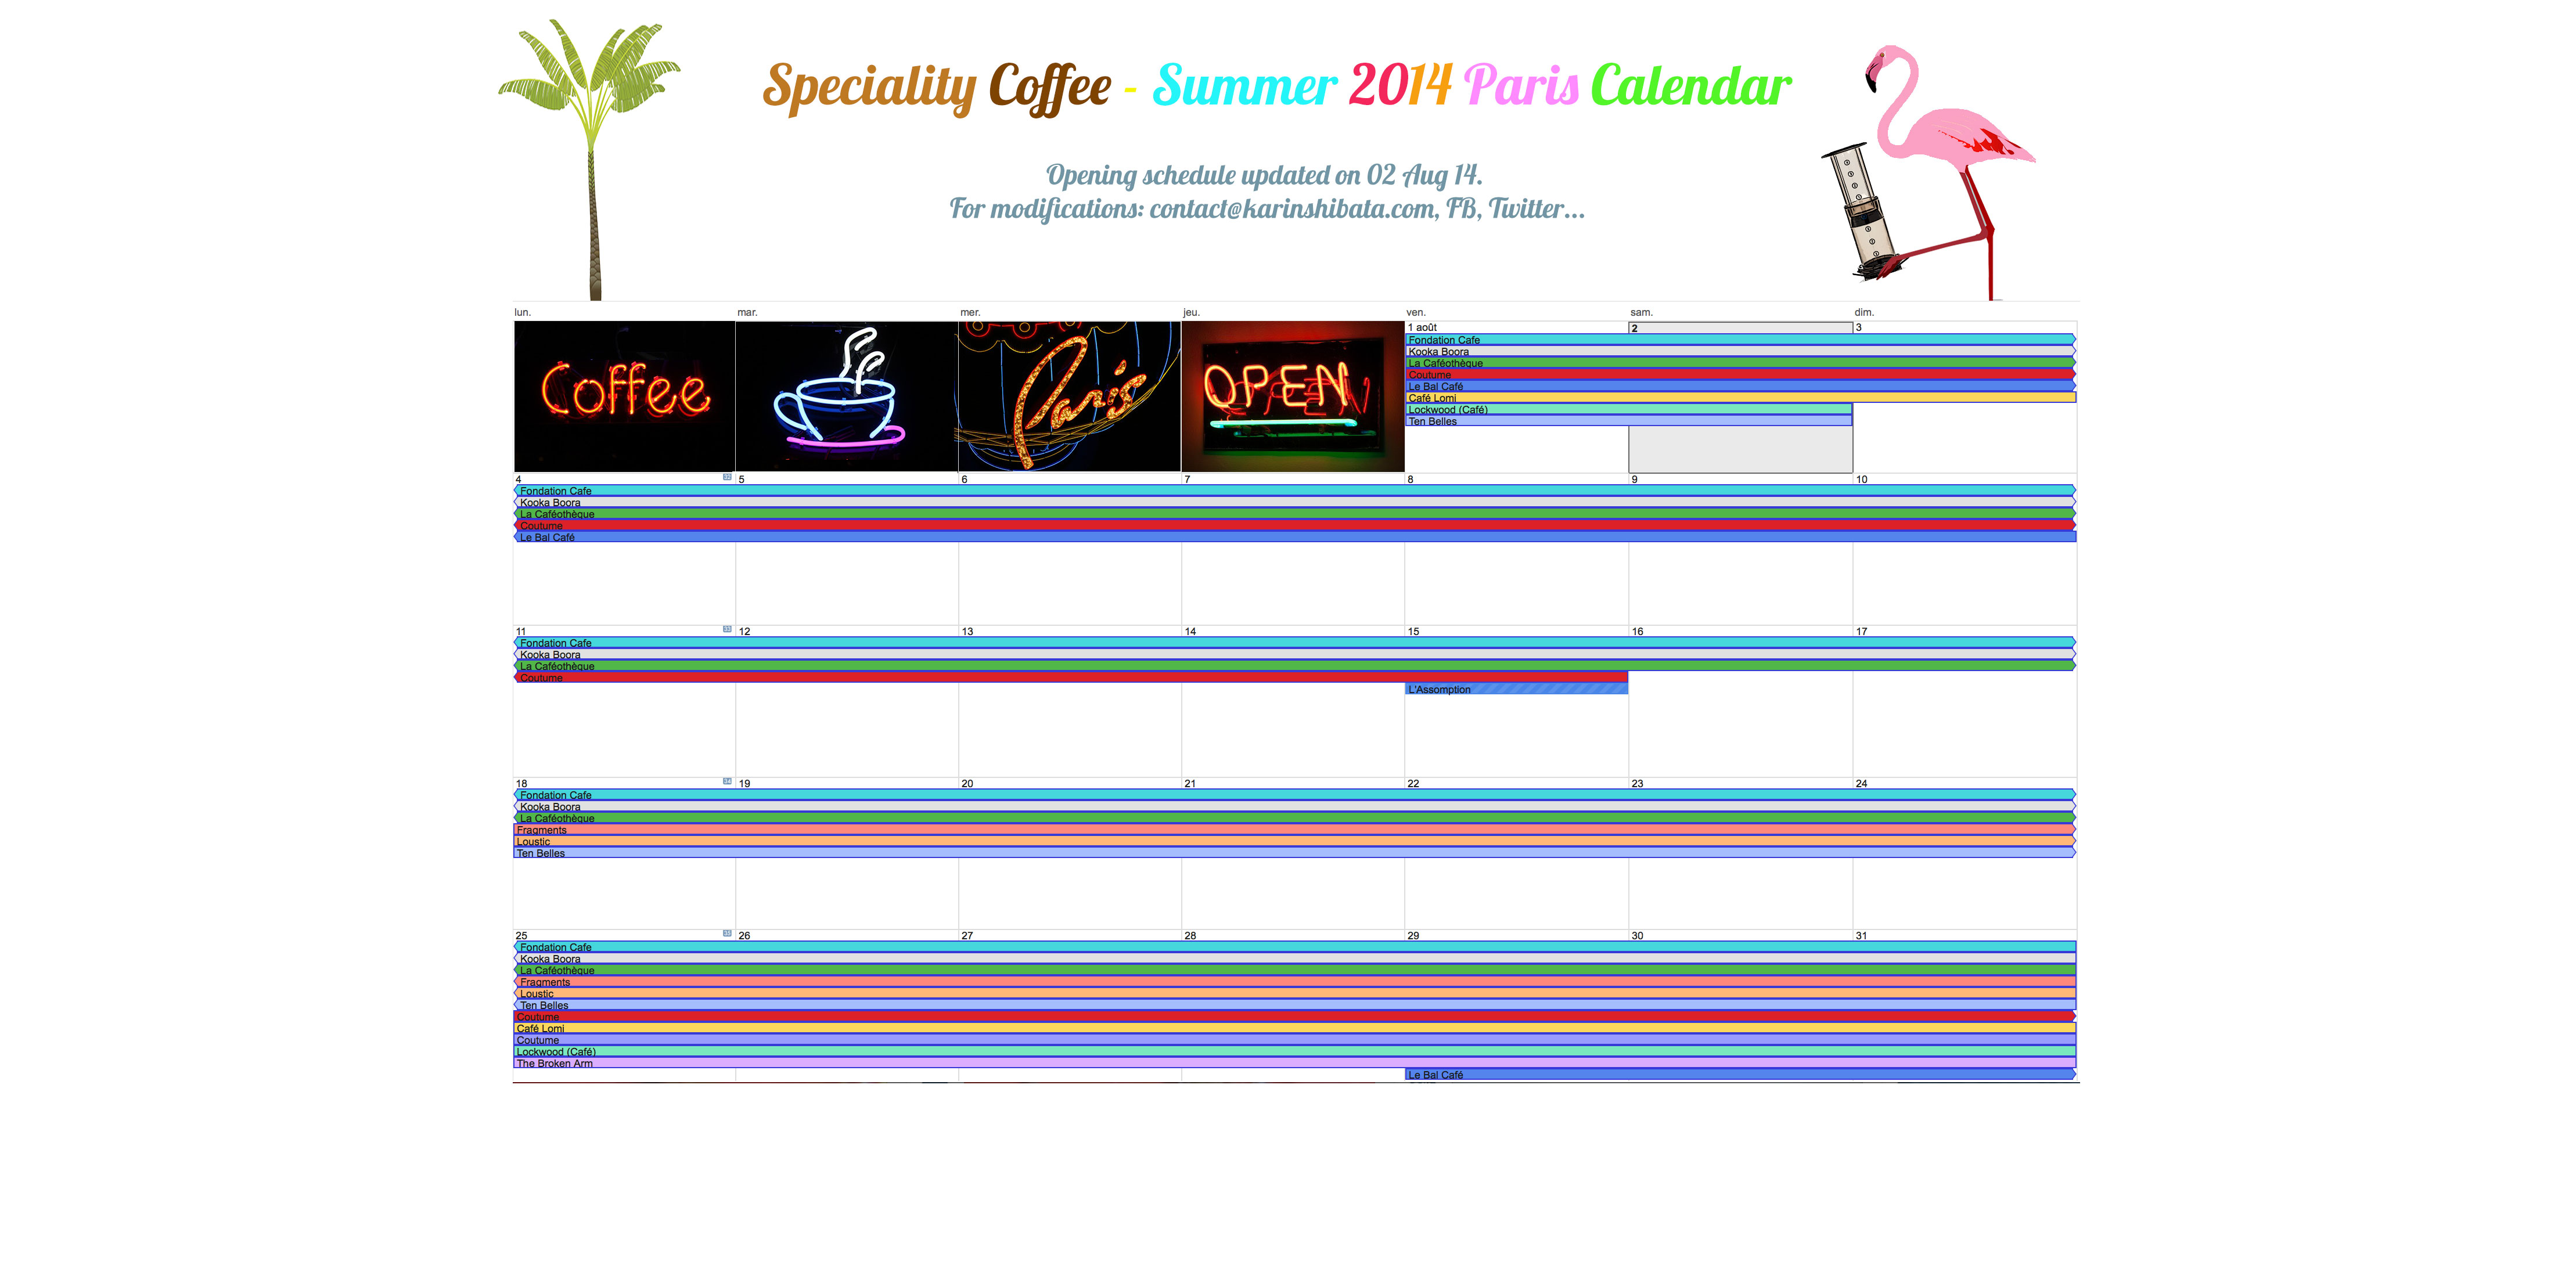 paris-2014-summer-speciality-coffee-calendar